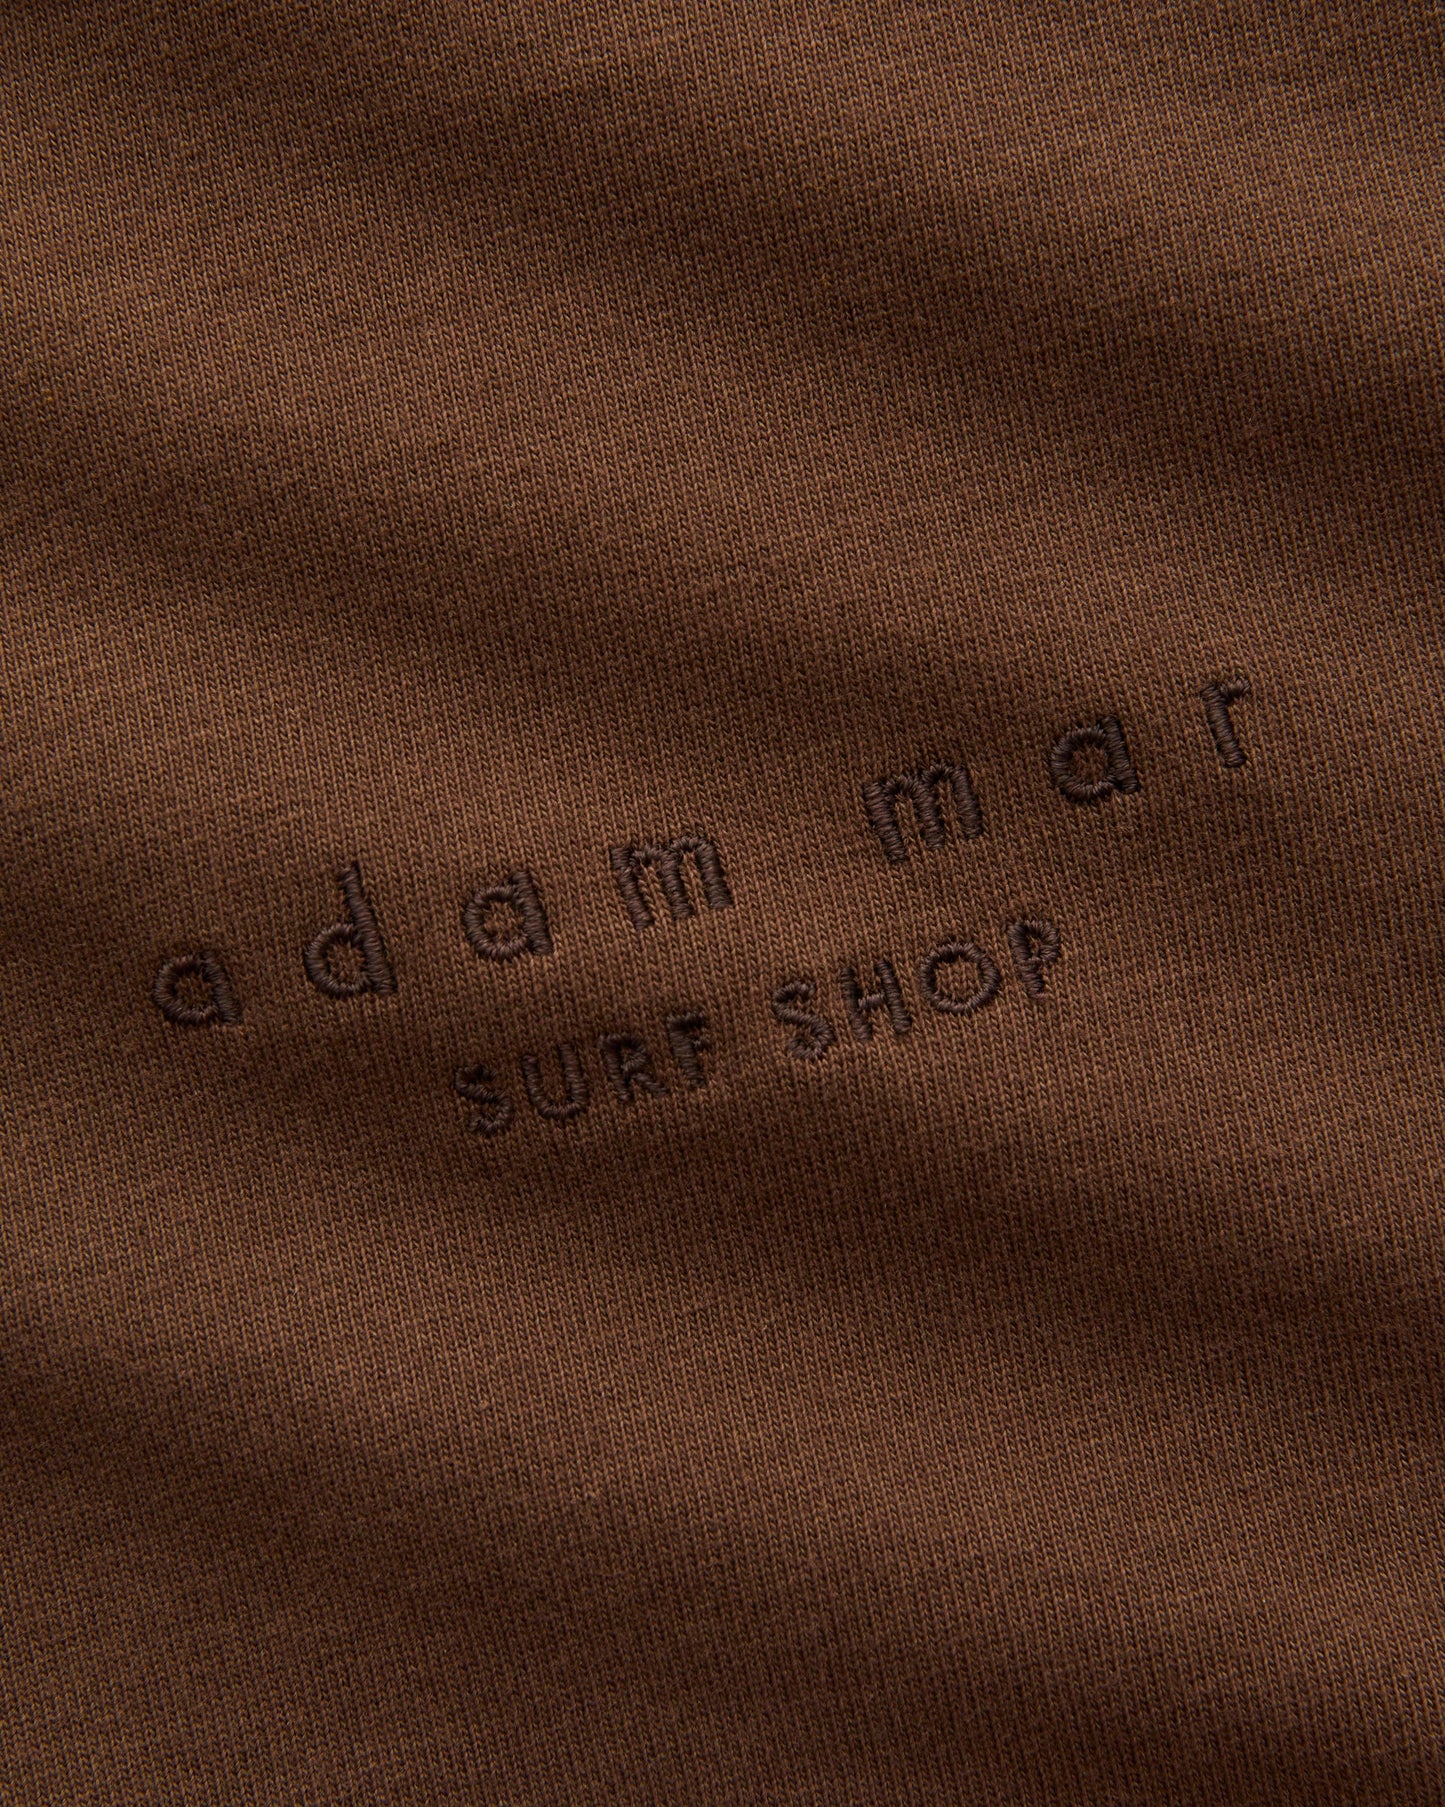 AM Uniform - short sleeve tee ( brown )